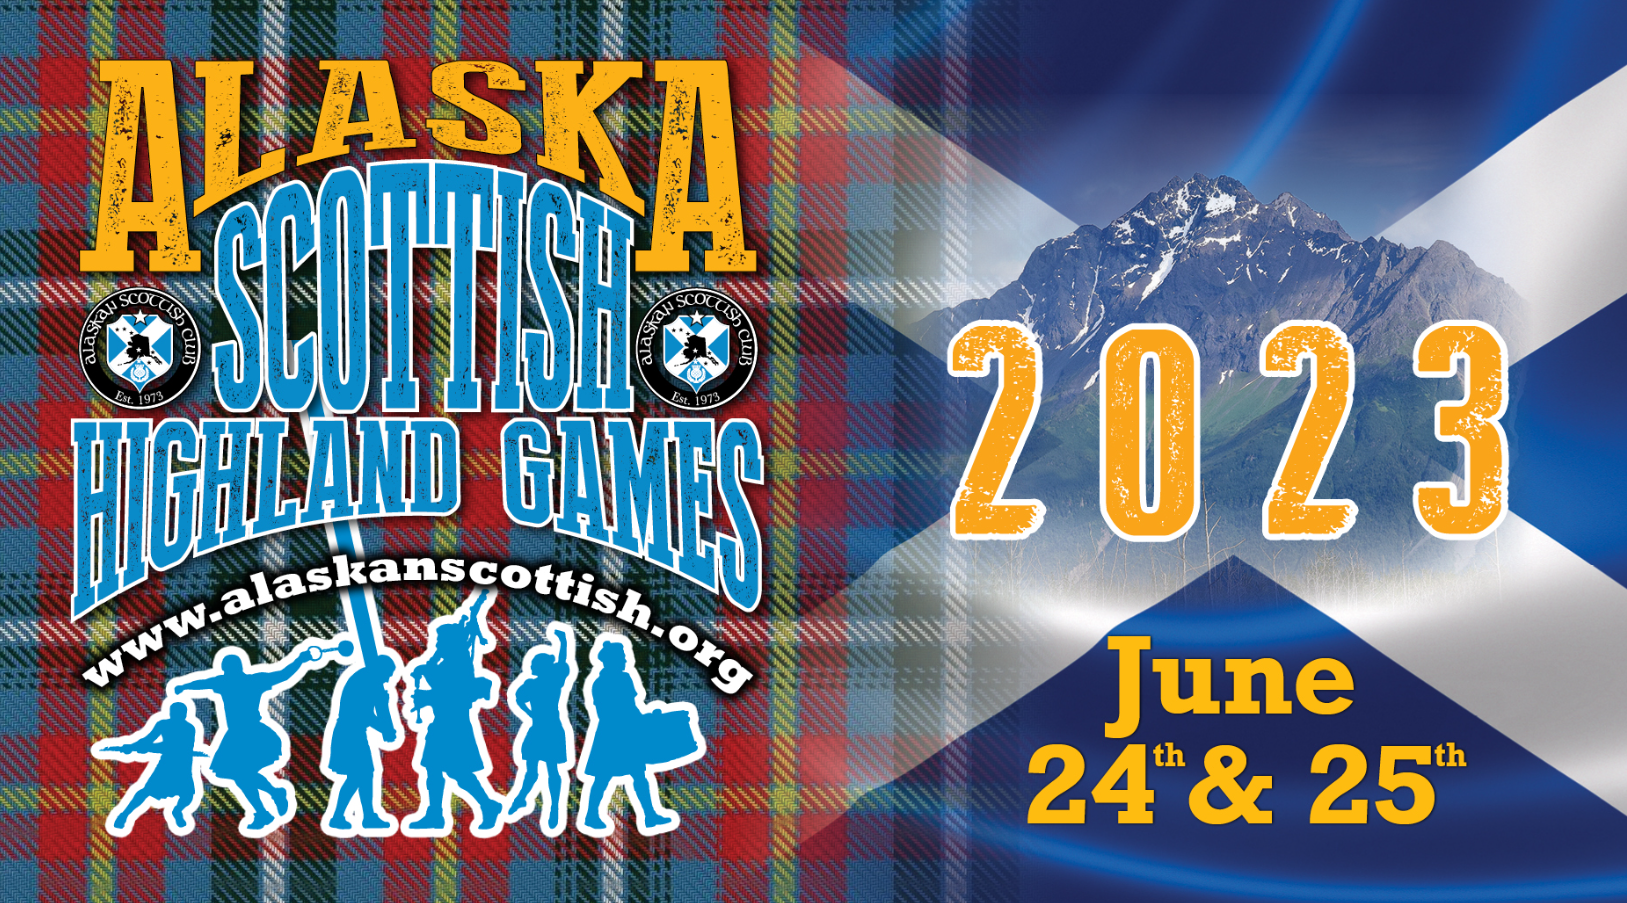 Alaska Scottish Highland Games